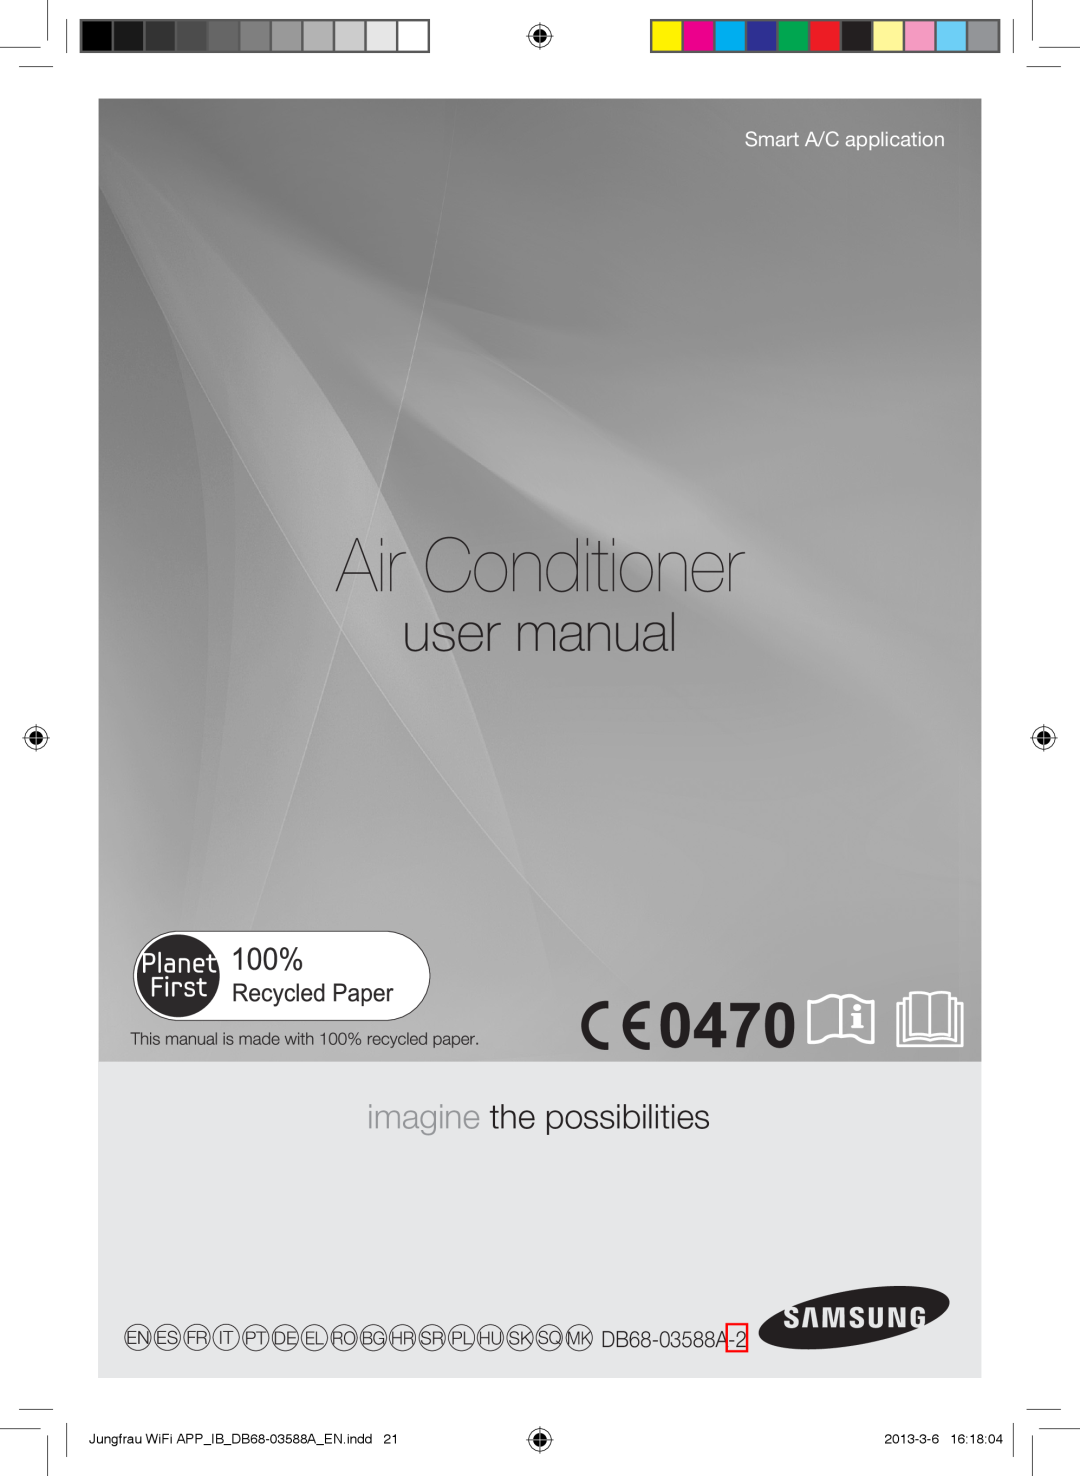 Samsung AR09FSSKABENEU Air Conditioner, user manual, imagine the possibilities, Smart A/C application, 2013-3-6 